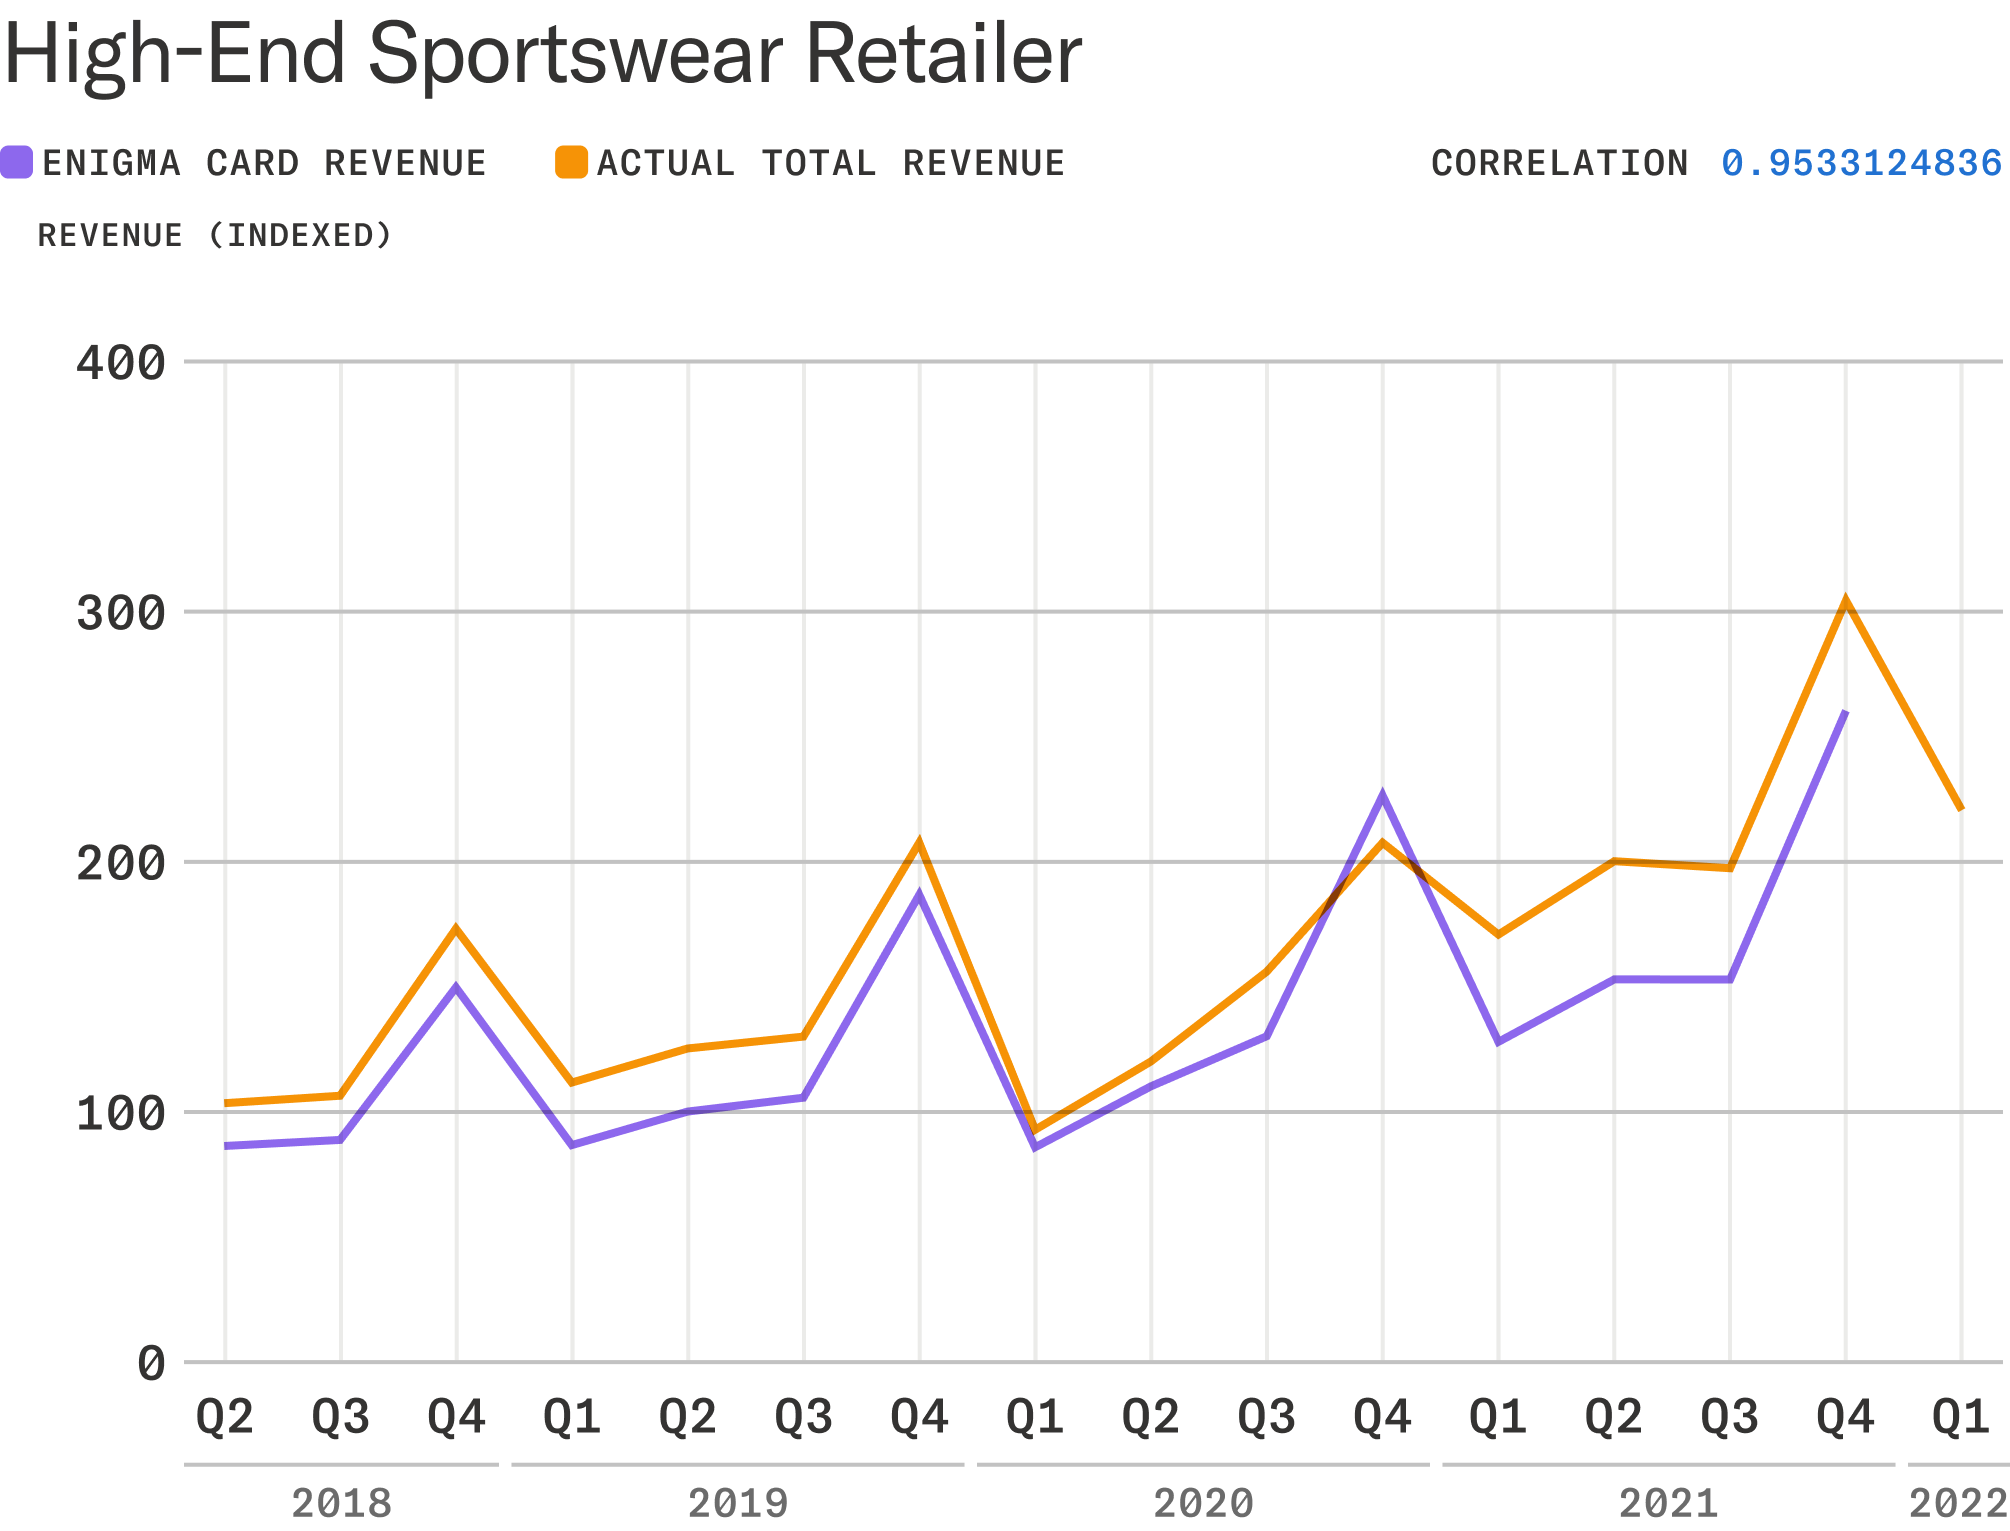 Chart showing Enigma revenue vs. reported revenue for high-end sportswear retailer